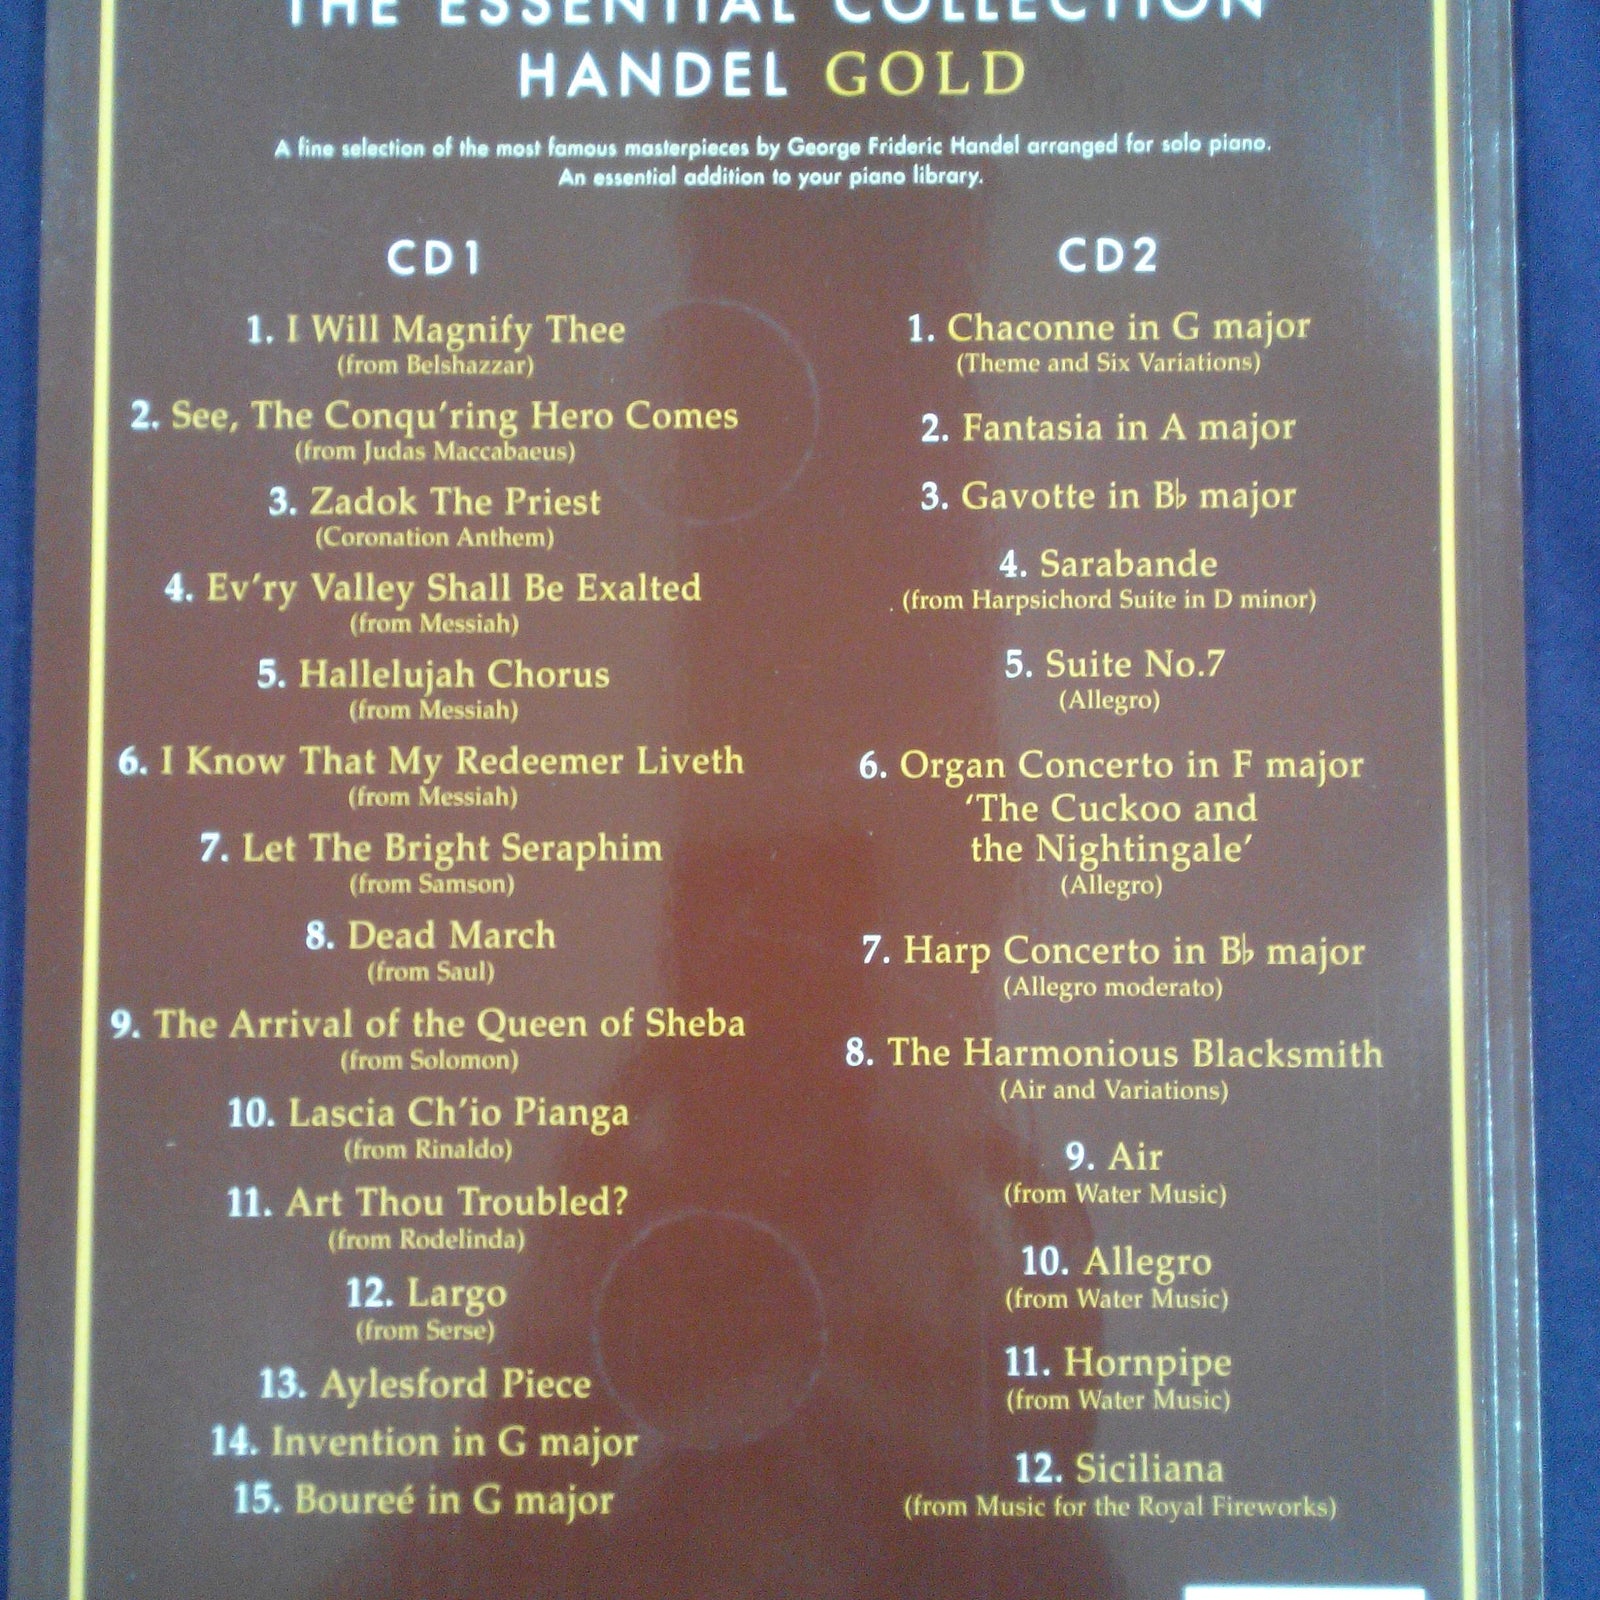 MS Ess Coll Handel Gold